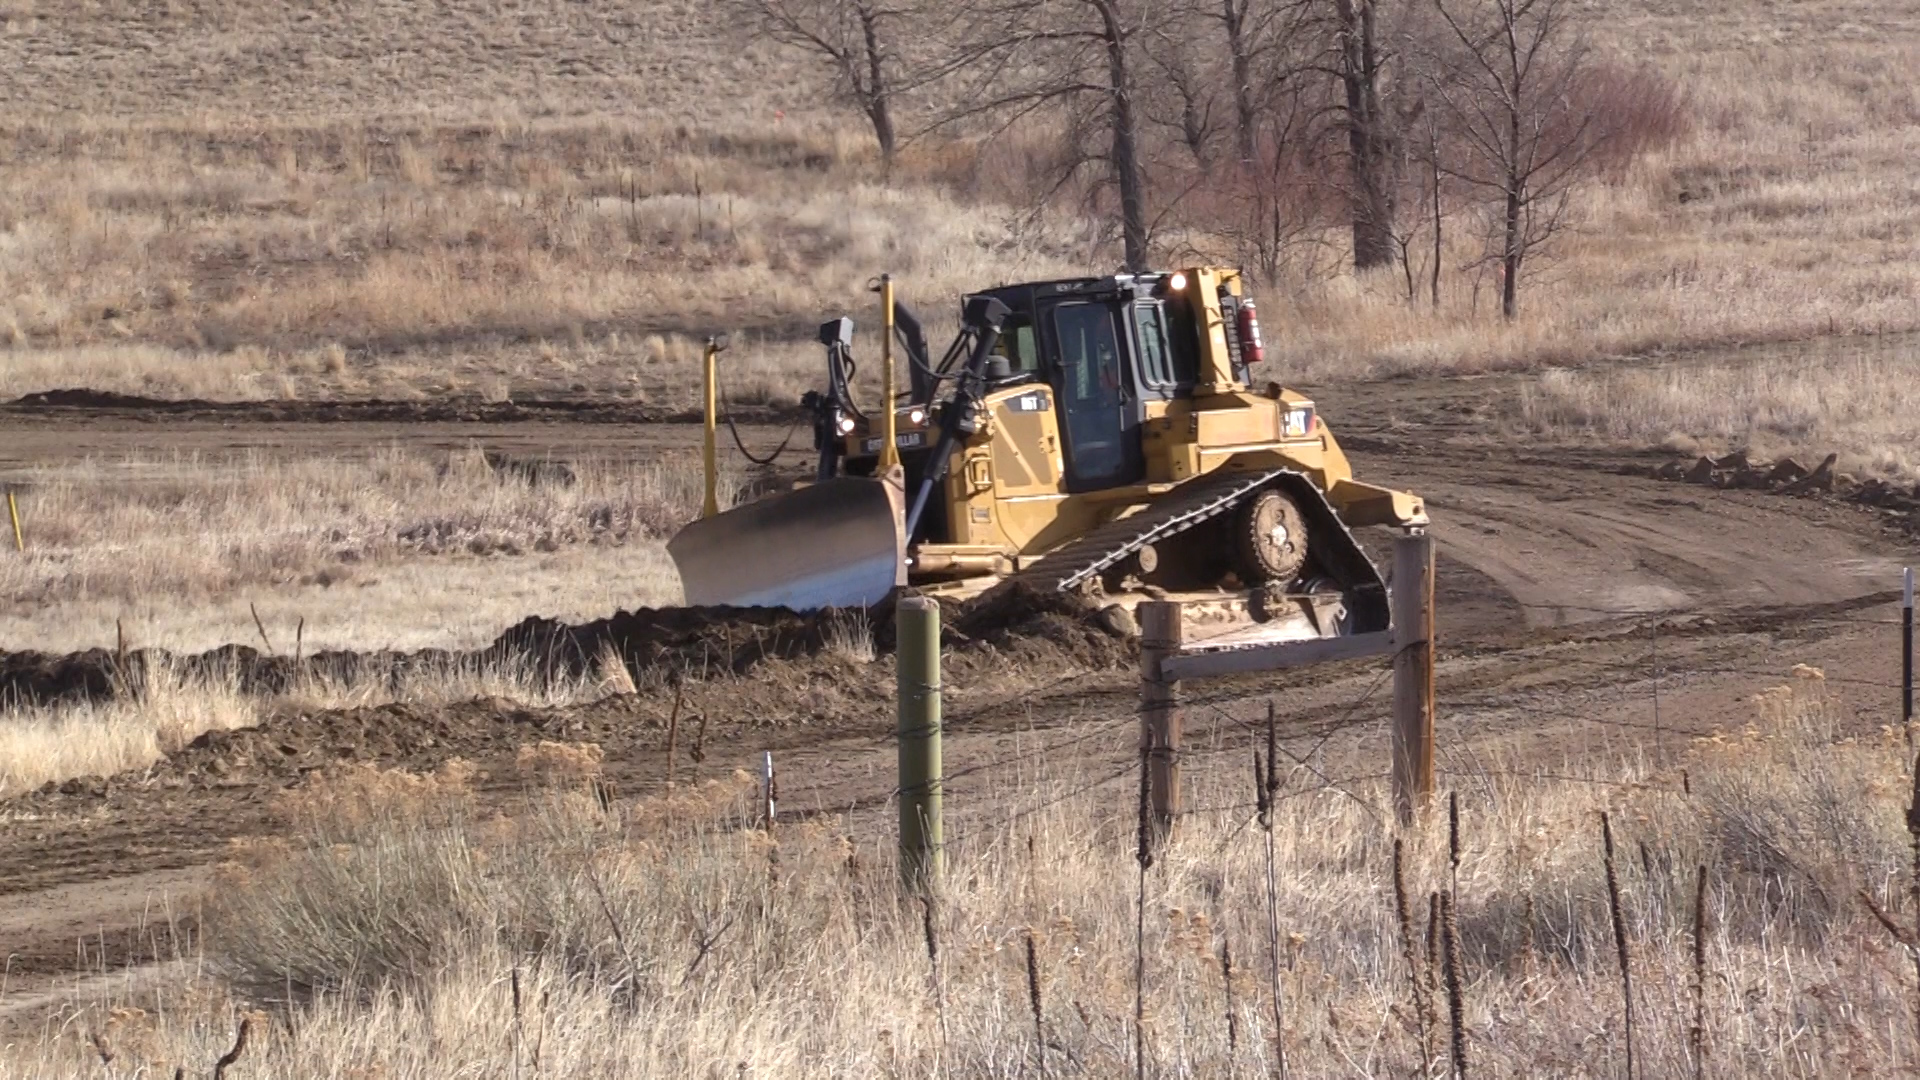 A bulldozer pushes dirt to create a road through dry grass.